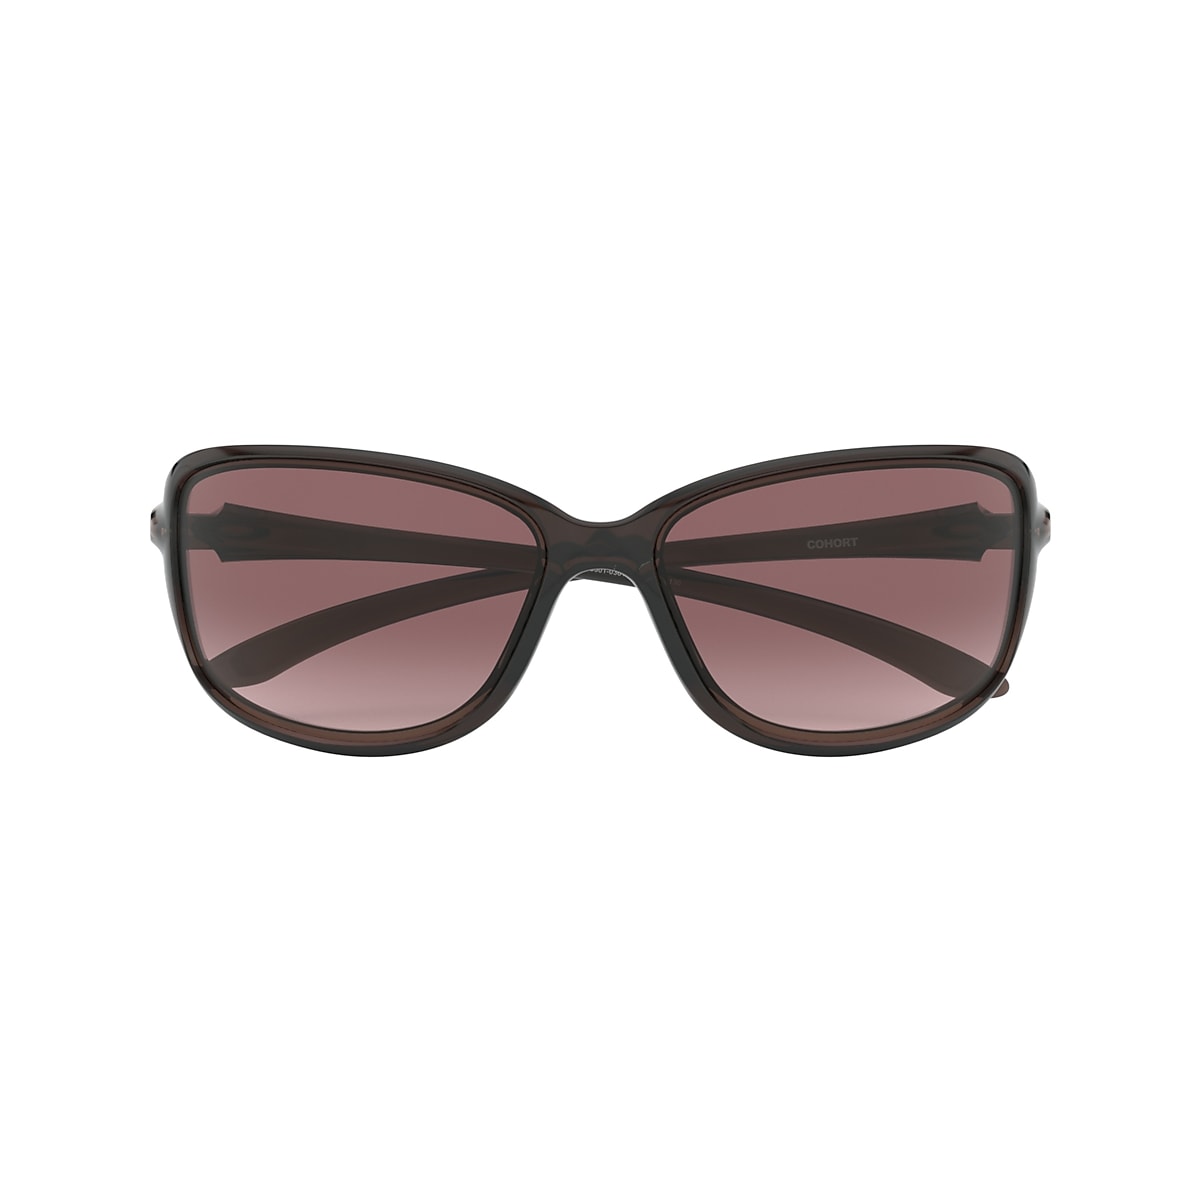 Cohort G40 Black Gradient Lenses, Amethyst Frame Sunglasses | Oakley® GB